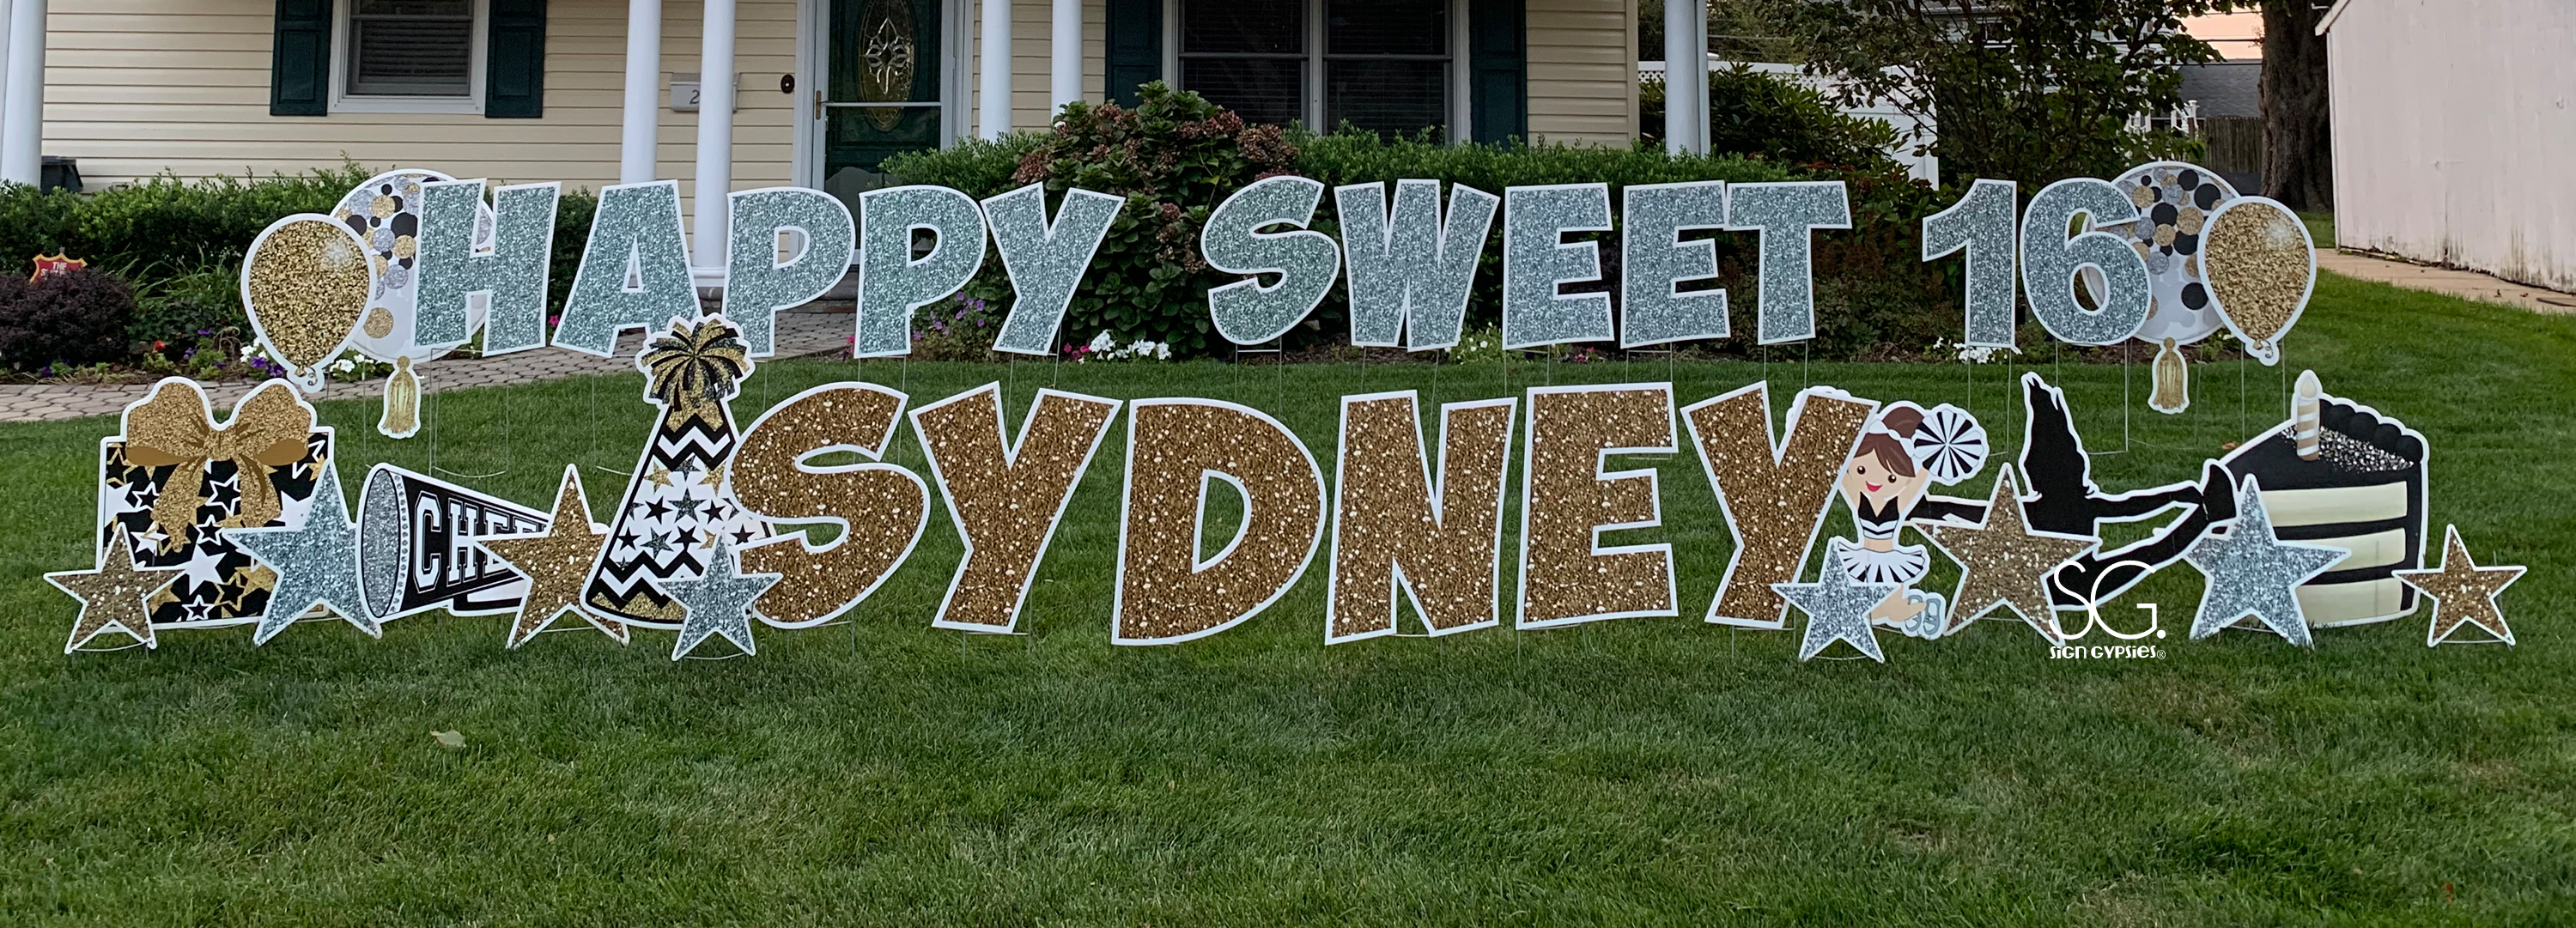 Happy Sweet Sixteen Sydney